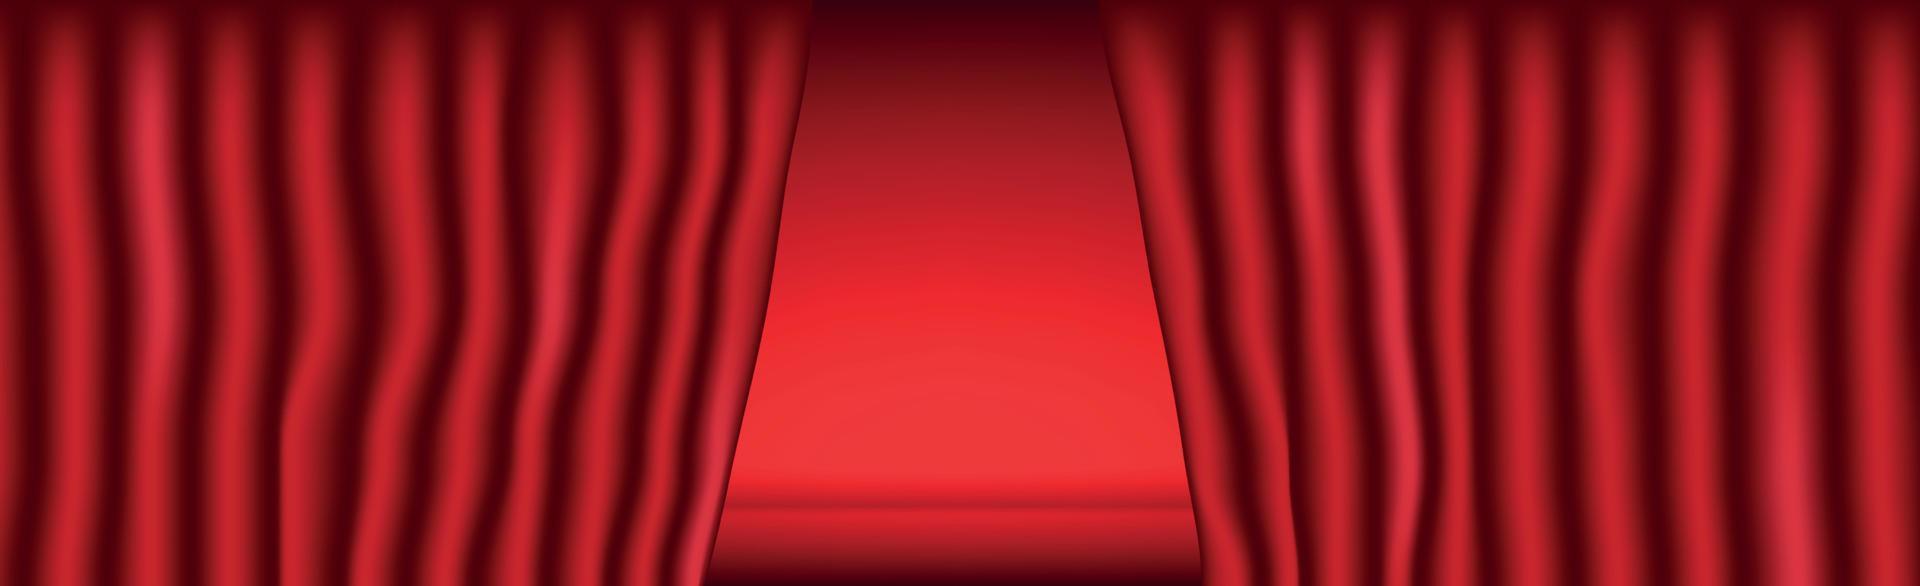 röd öppning teater ridå, panorama- bakgrund mall - vektor